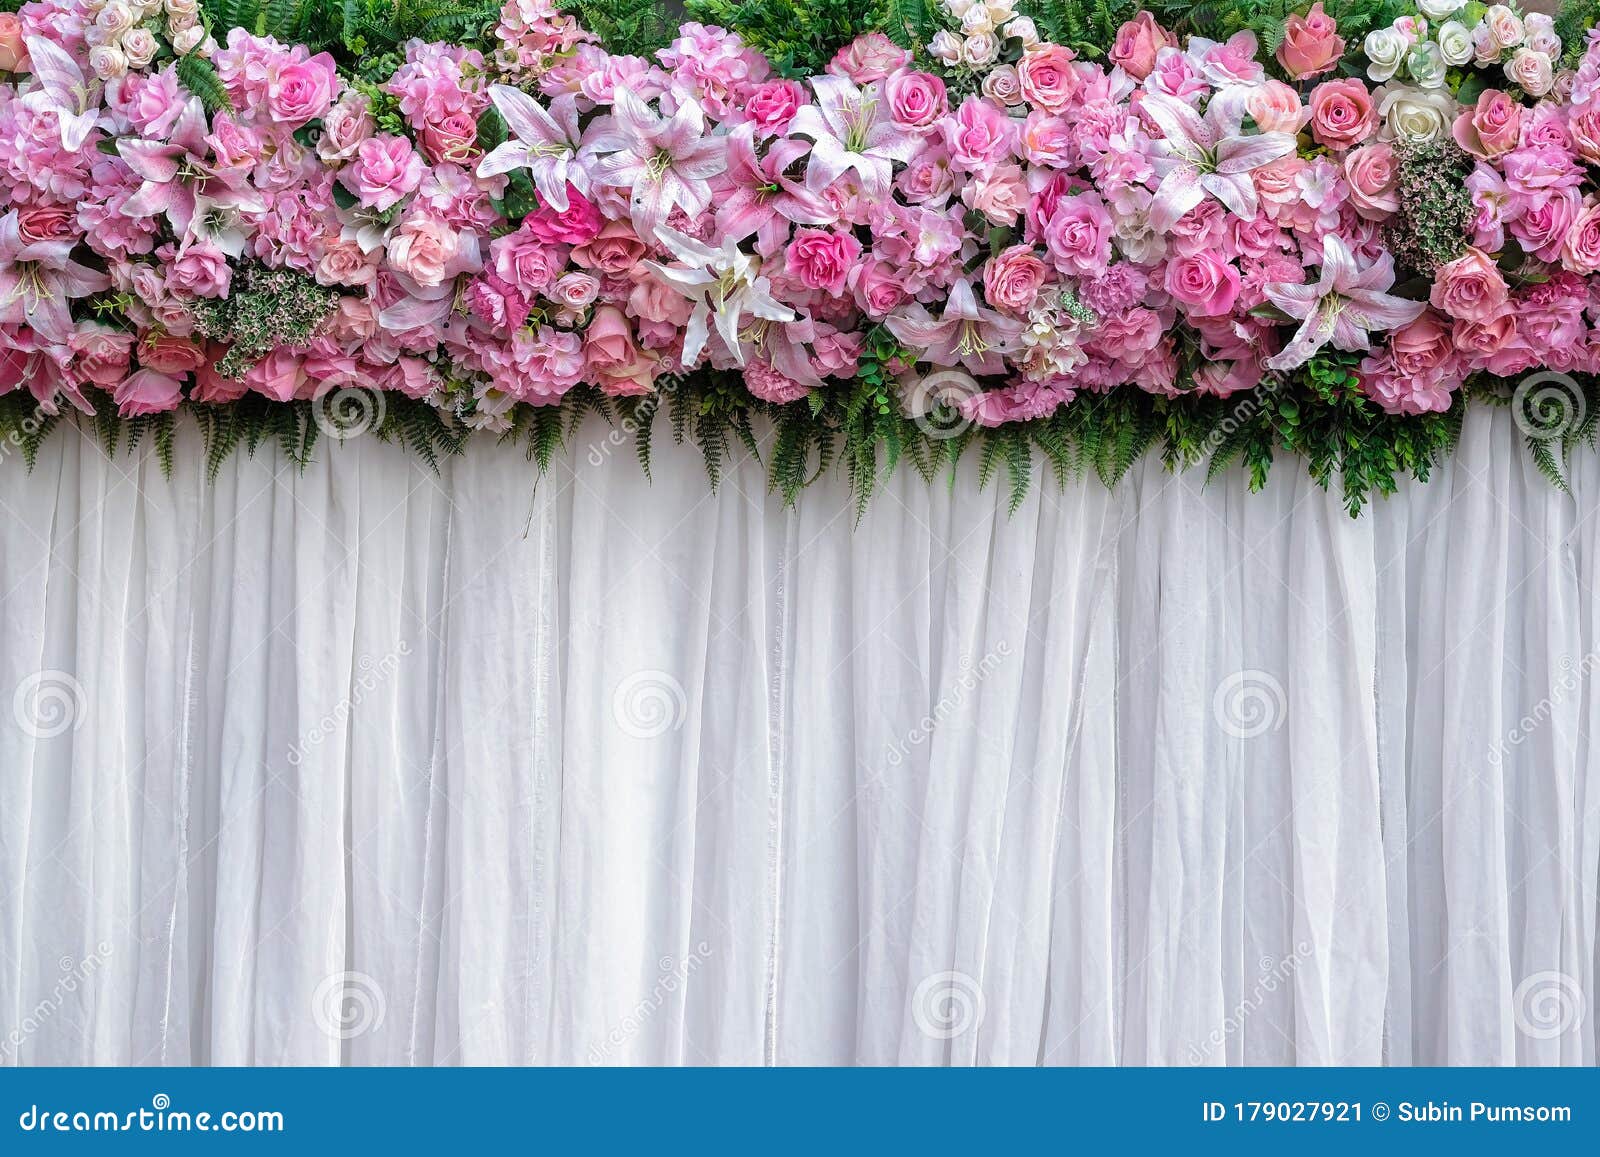 Backdrop Flowers Arrangement for Wedding Ceremony Stock Image - Image ...